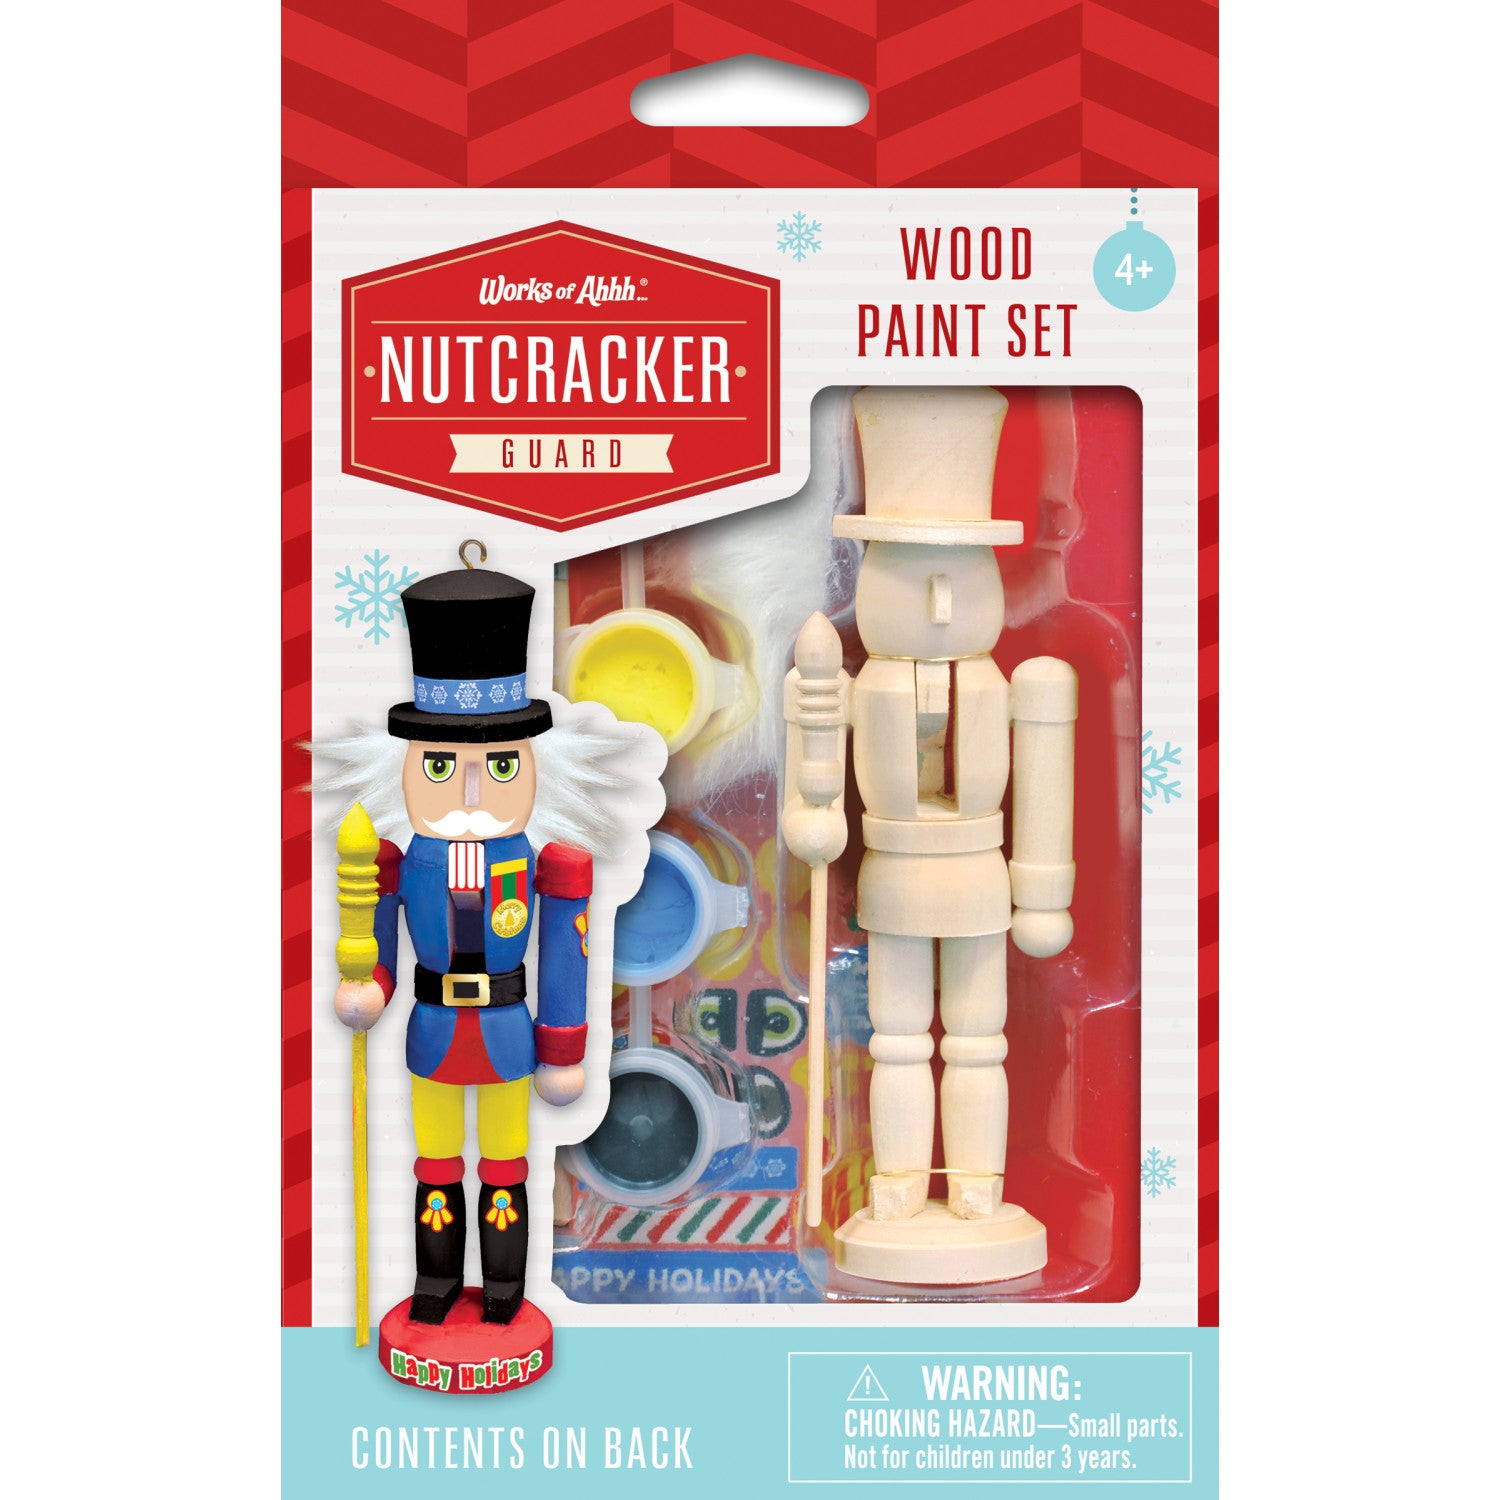 Nutcracker Guard Ornament Wood Paint Kit